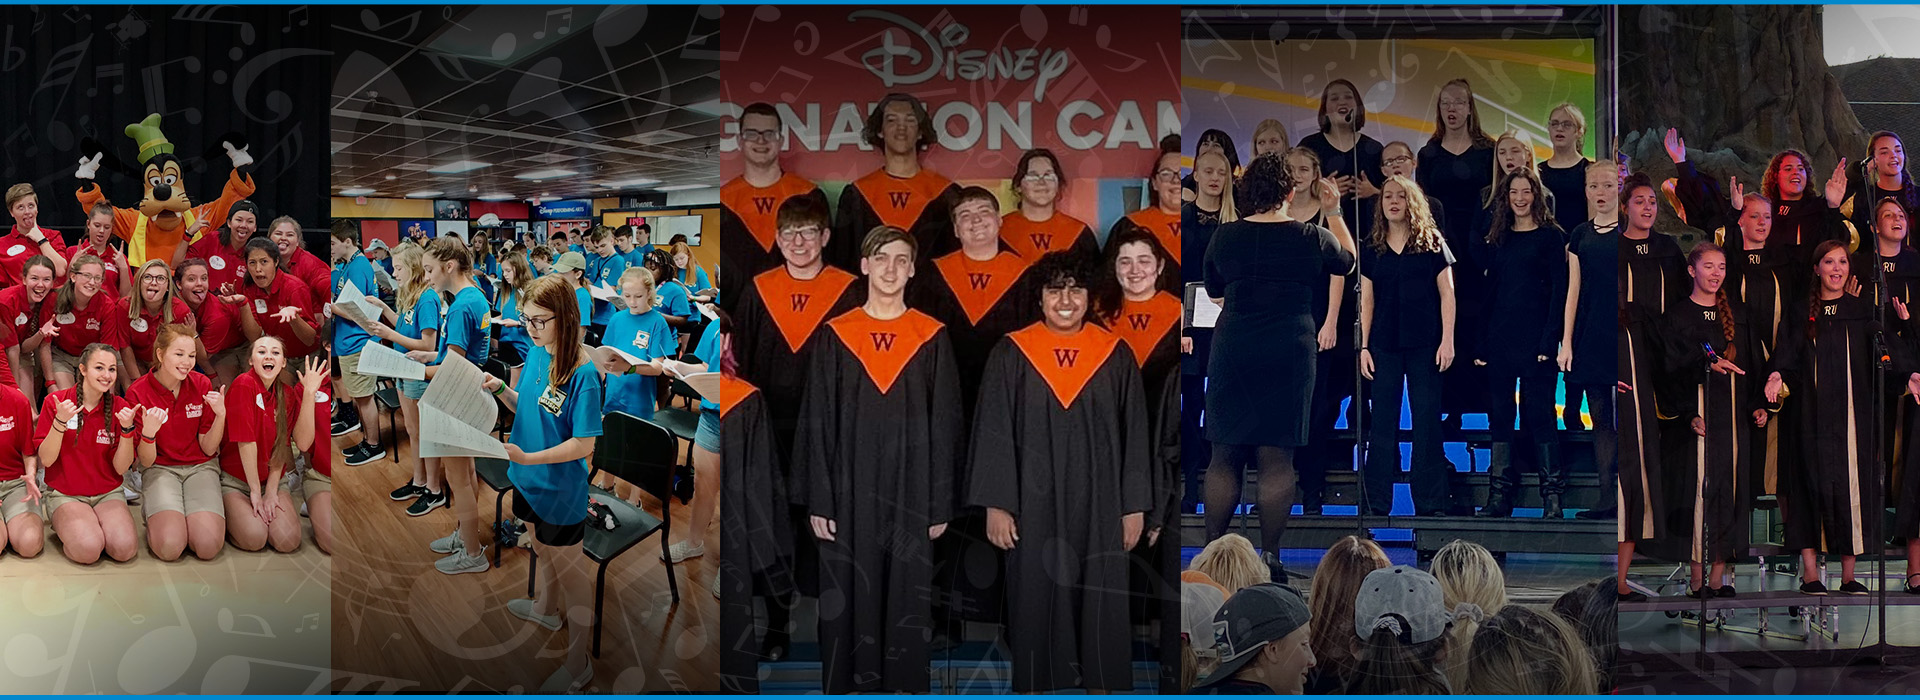 Disney Imagination Campus choir travel